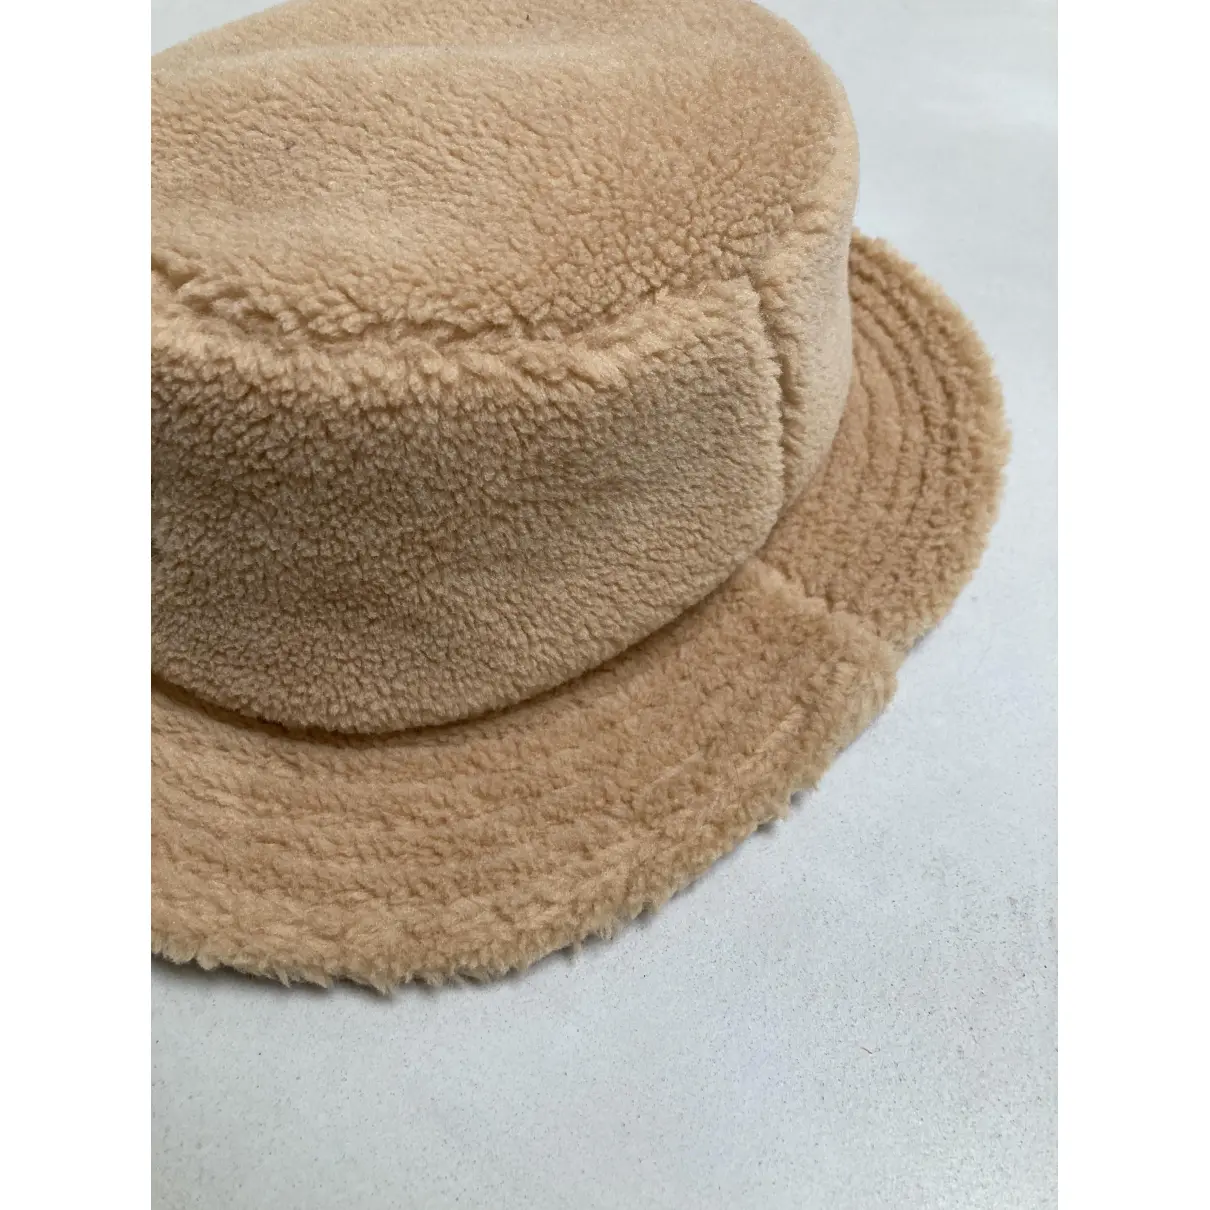 Buy Kangol Hat online